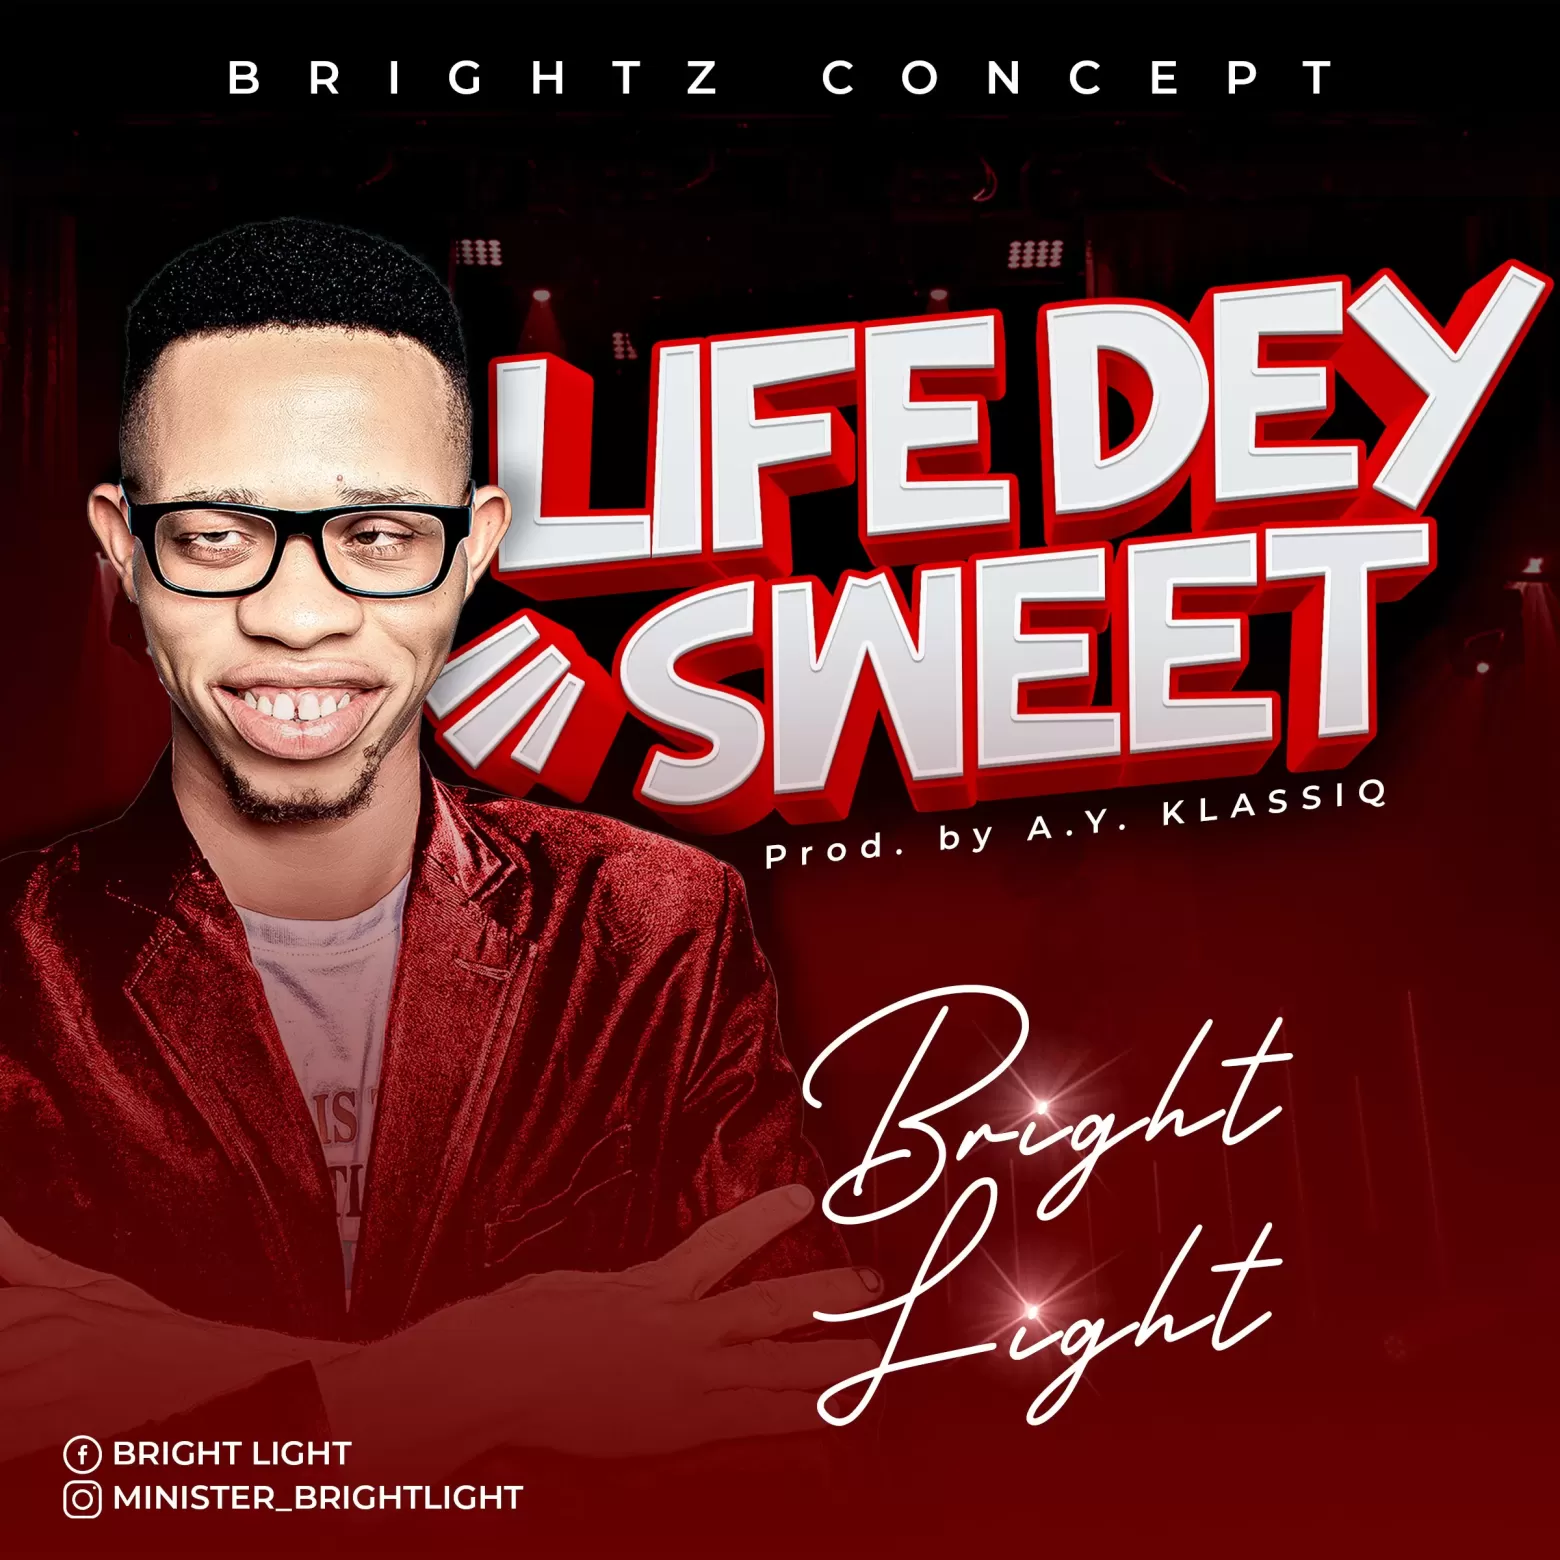 Life dey sweet by Bright Light